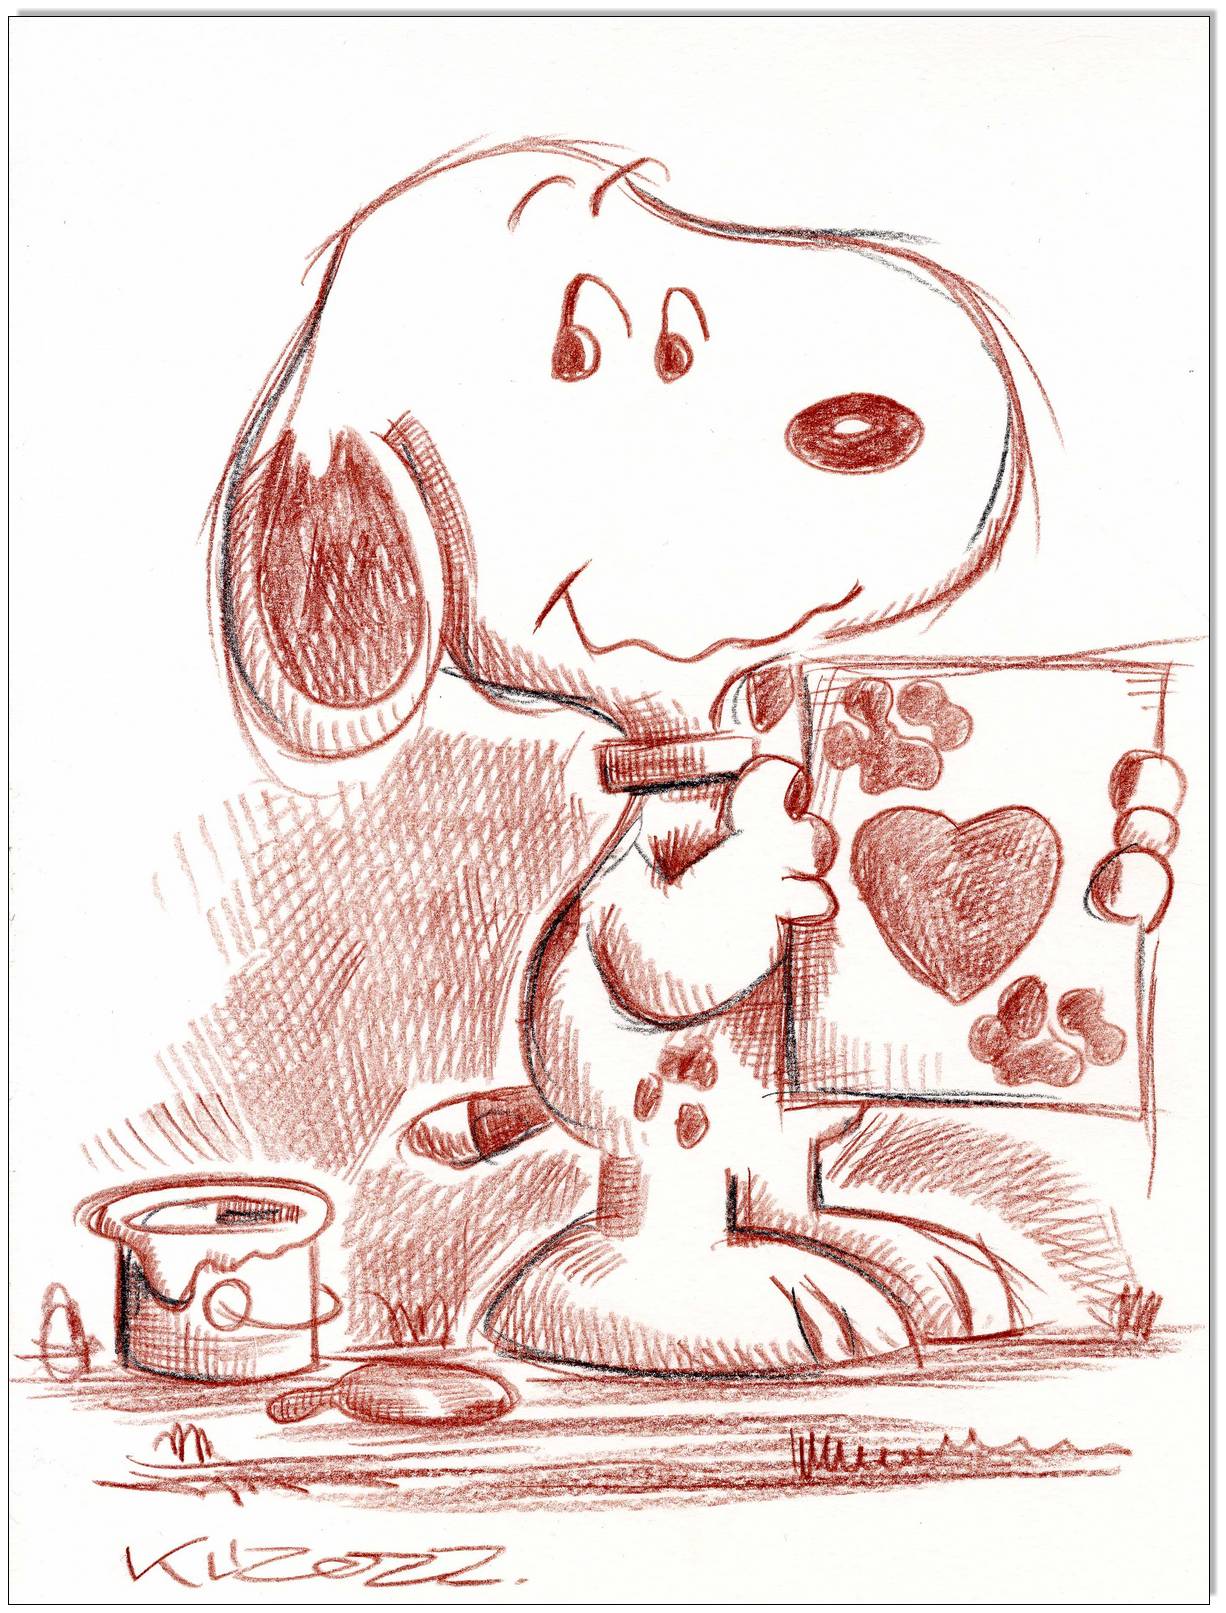 PEANUTS Snoopy HEART - 24 x 32 cm